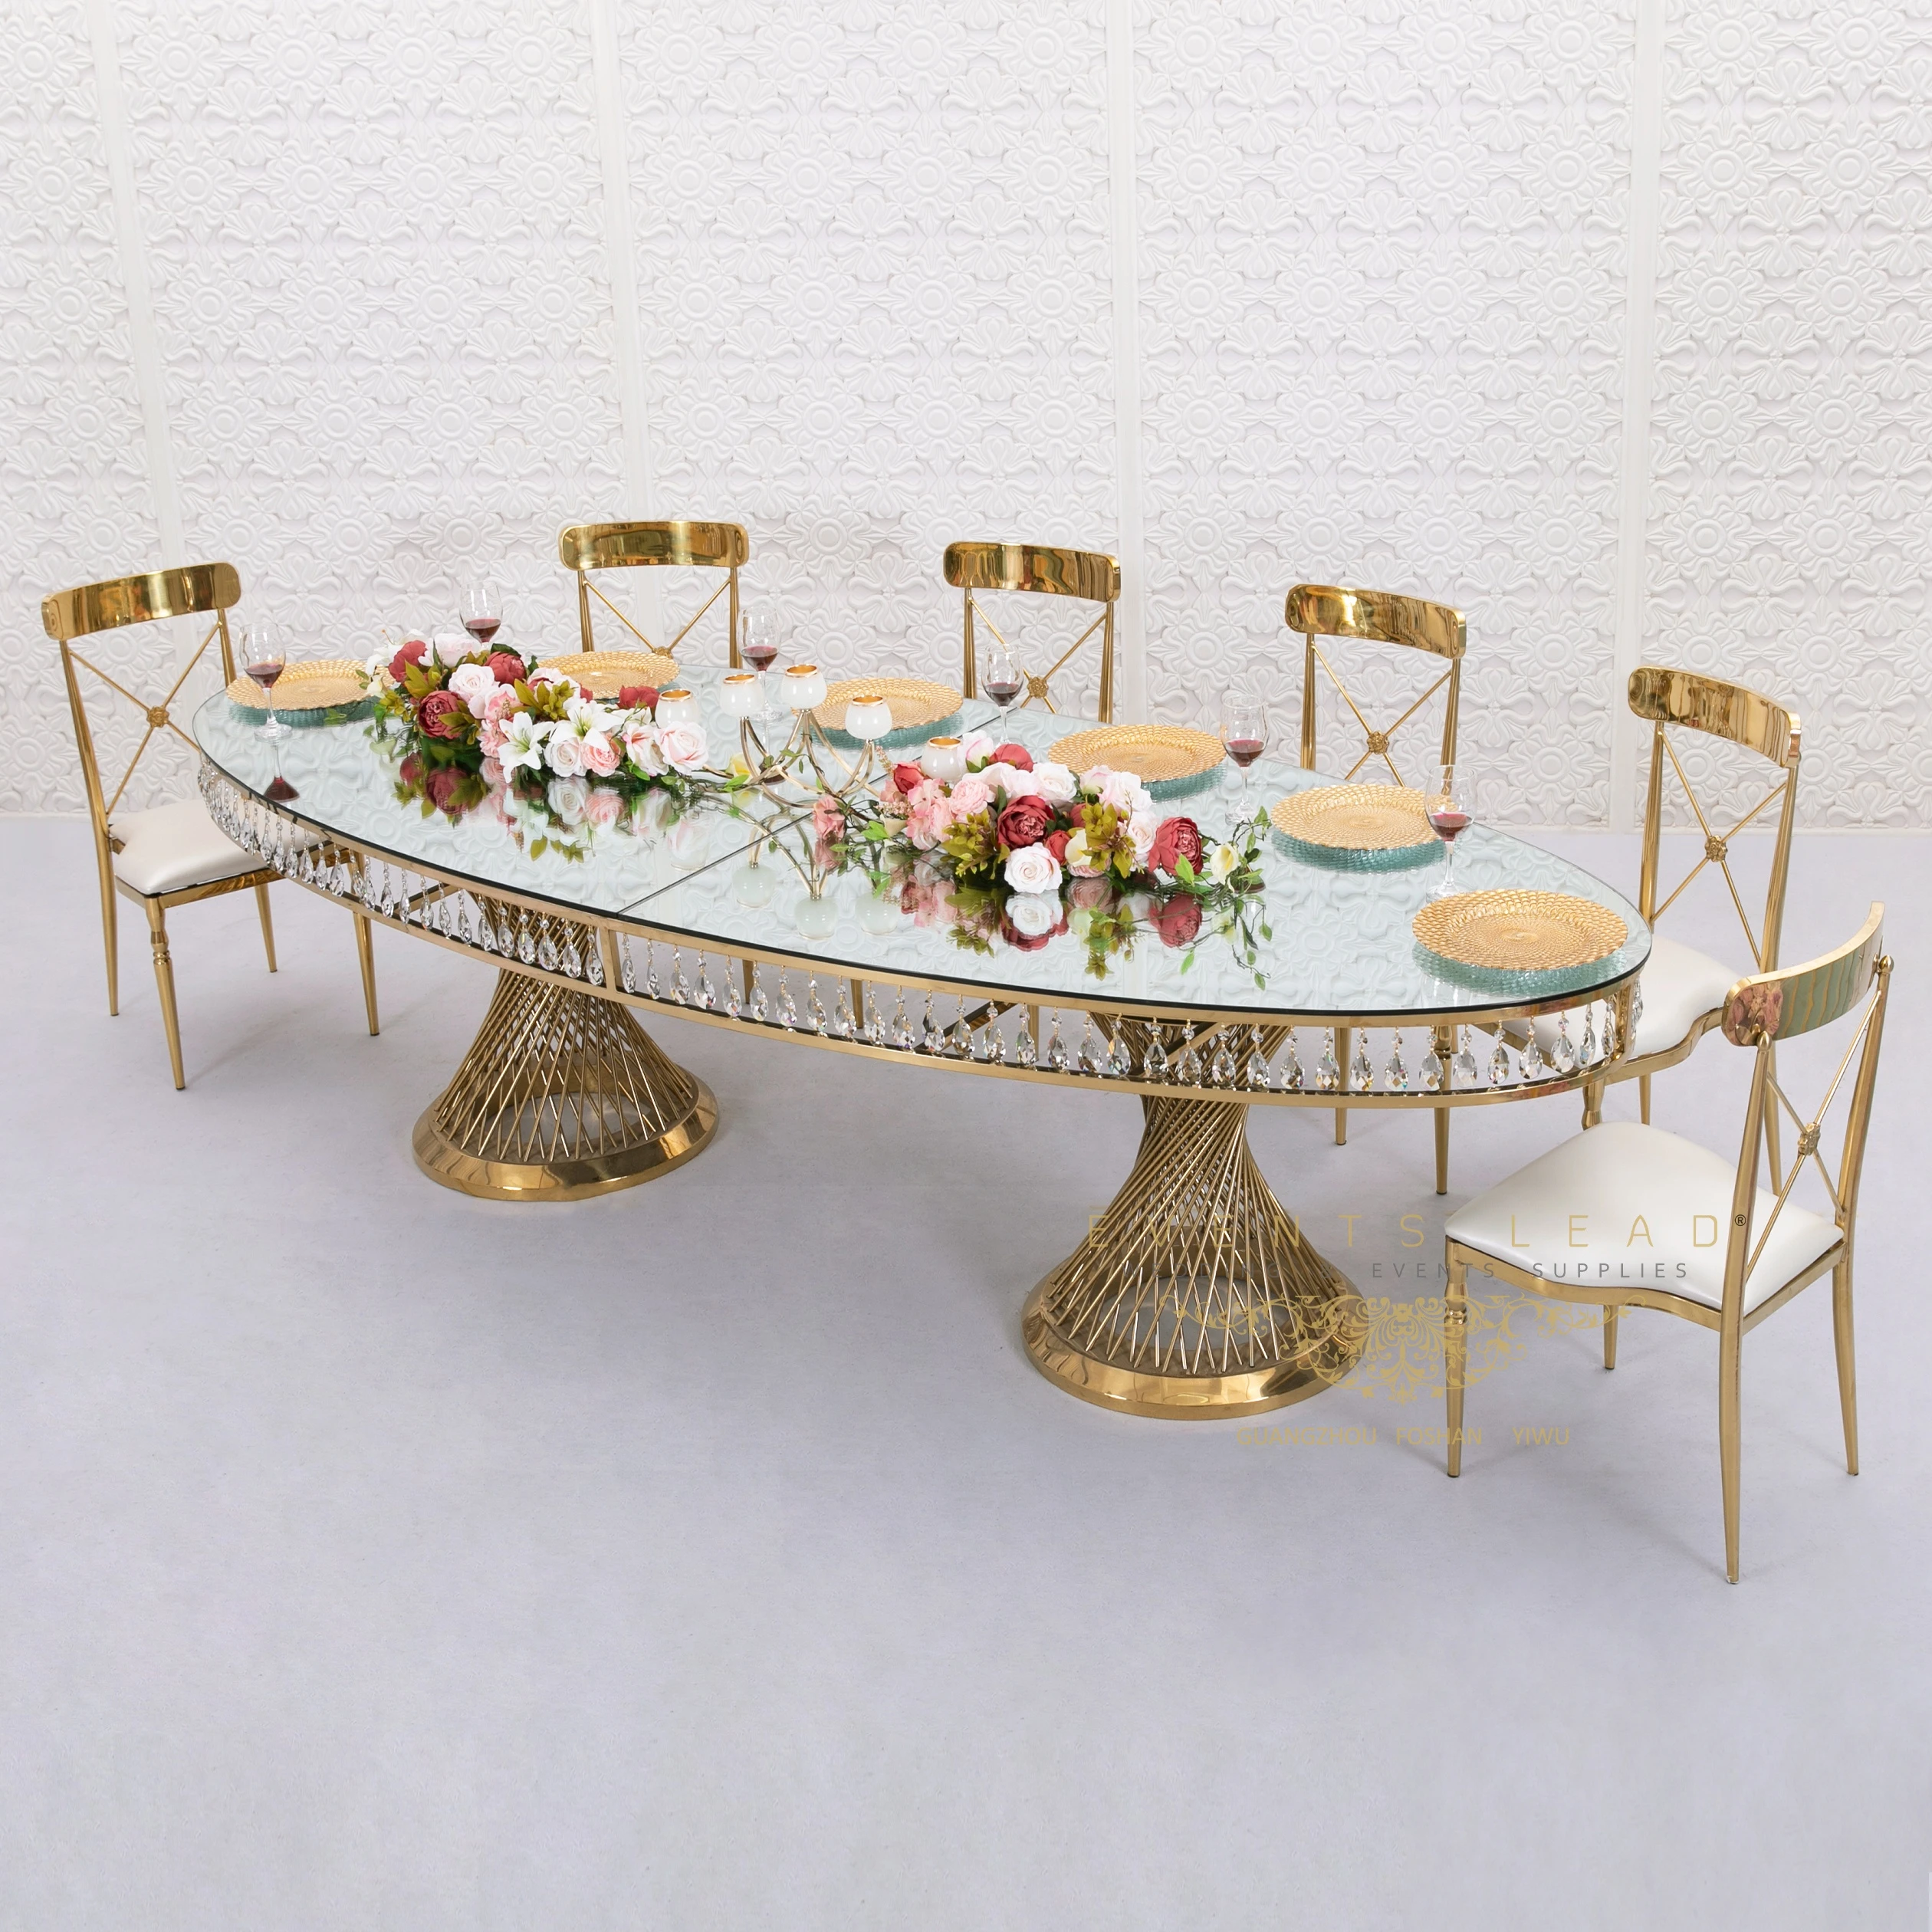 Gold Stainless Steel Popular GEMMA VORAGE Oval Wedding Crystal Event Table